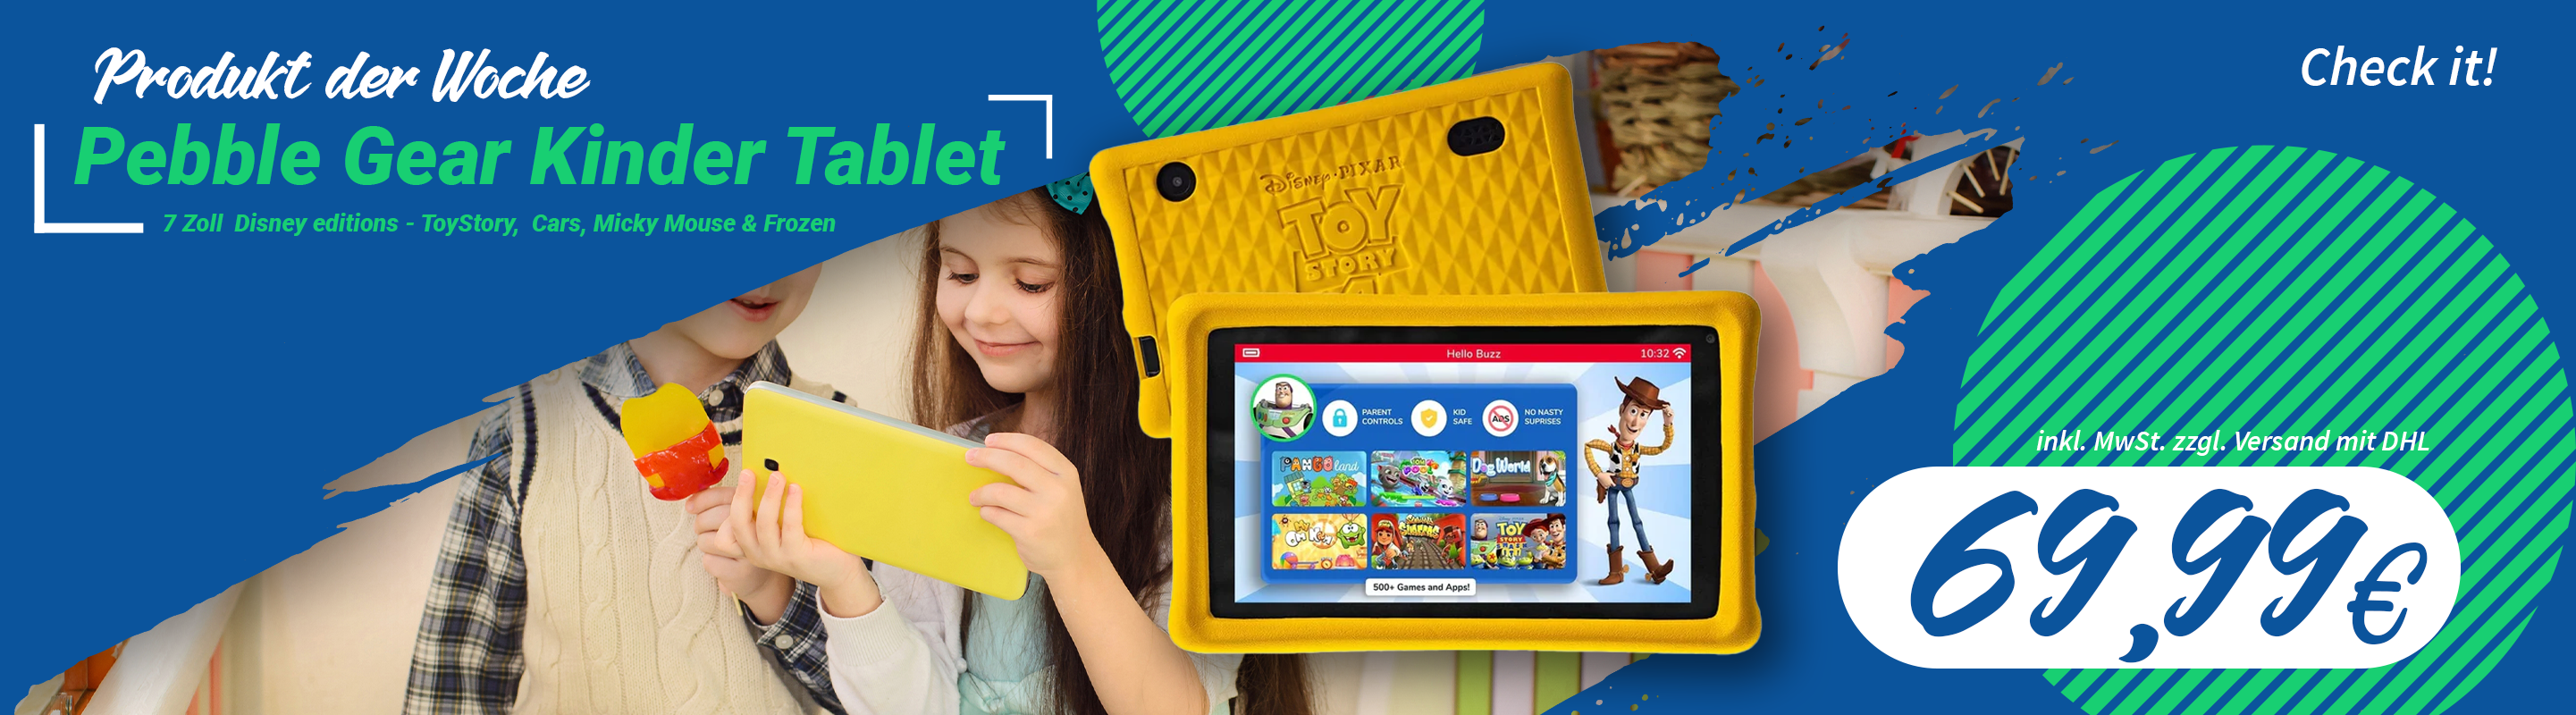 TP Produkt des Monats - Pebble Gear Kids Tablet Sliderbanner